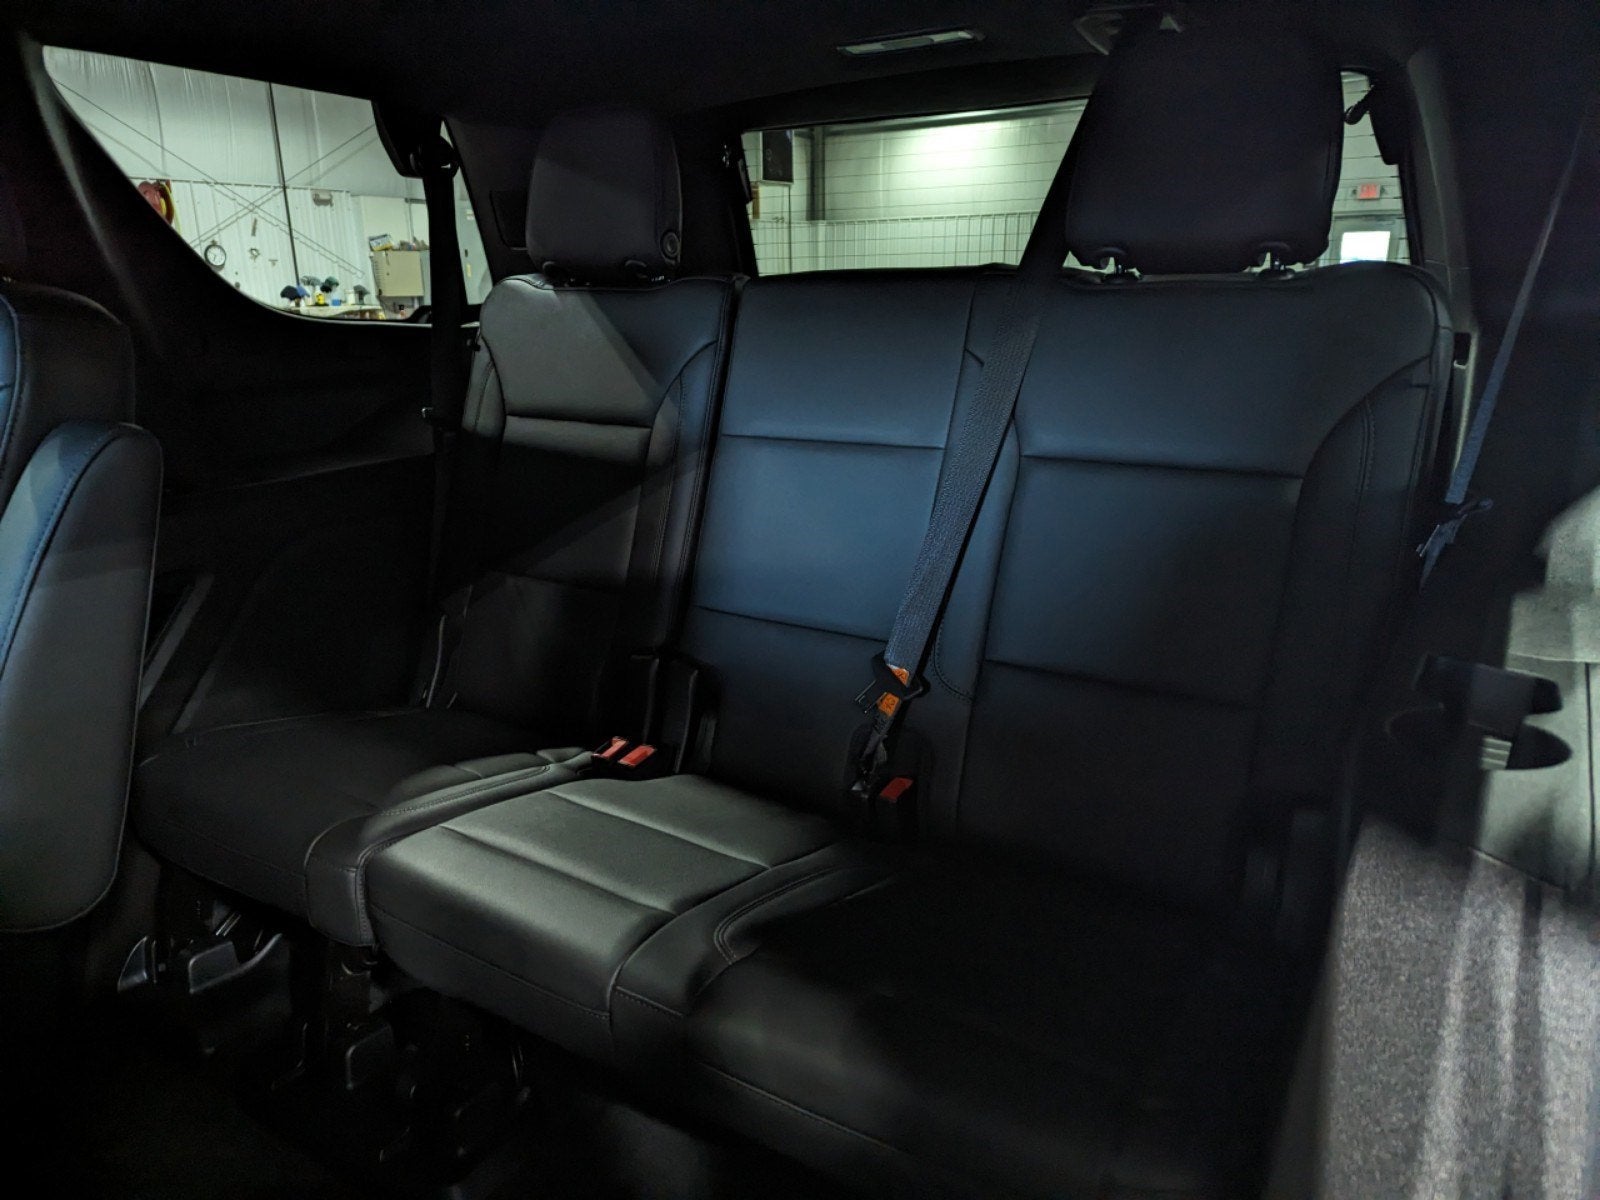 2021 Chevrolet Tahoe Z71 Premium Leather Heated Preferred Equipment Pkg Sunroof